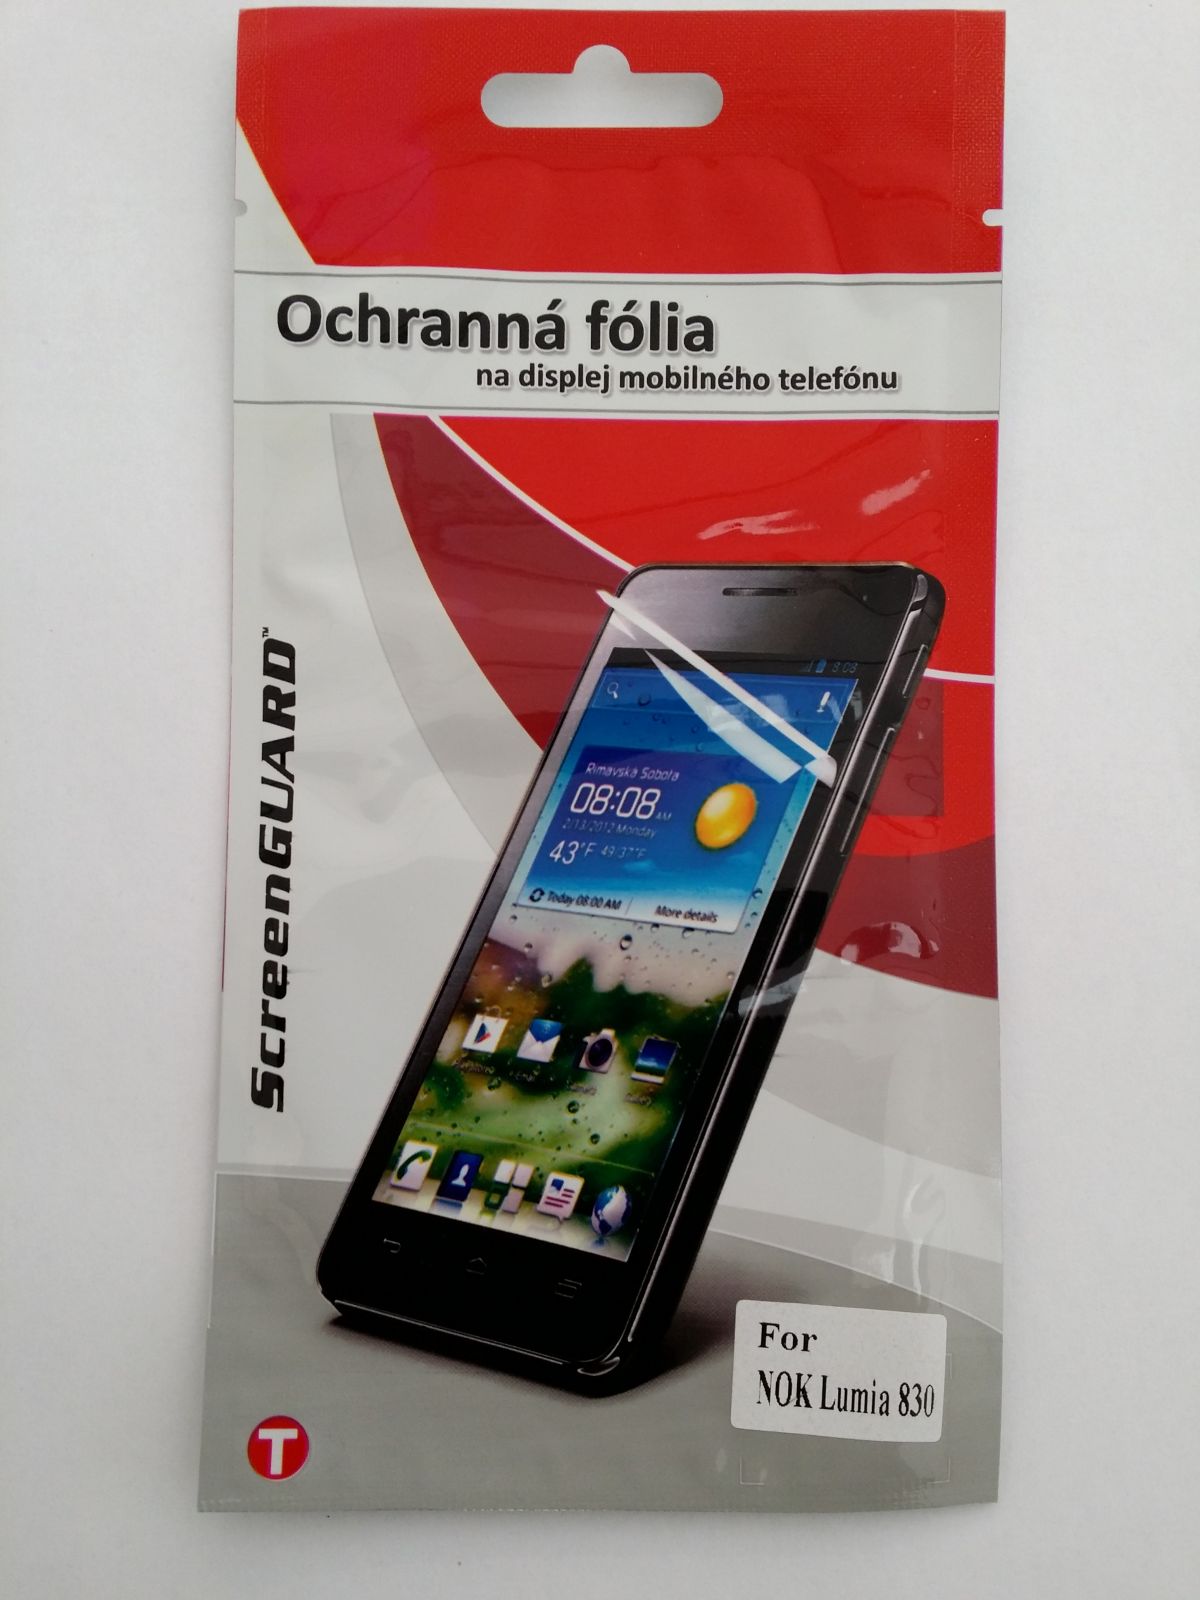 Ochranná folie Mobilnet Nokia Lumia 830